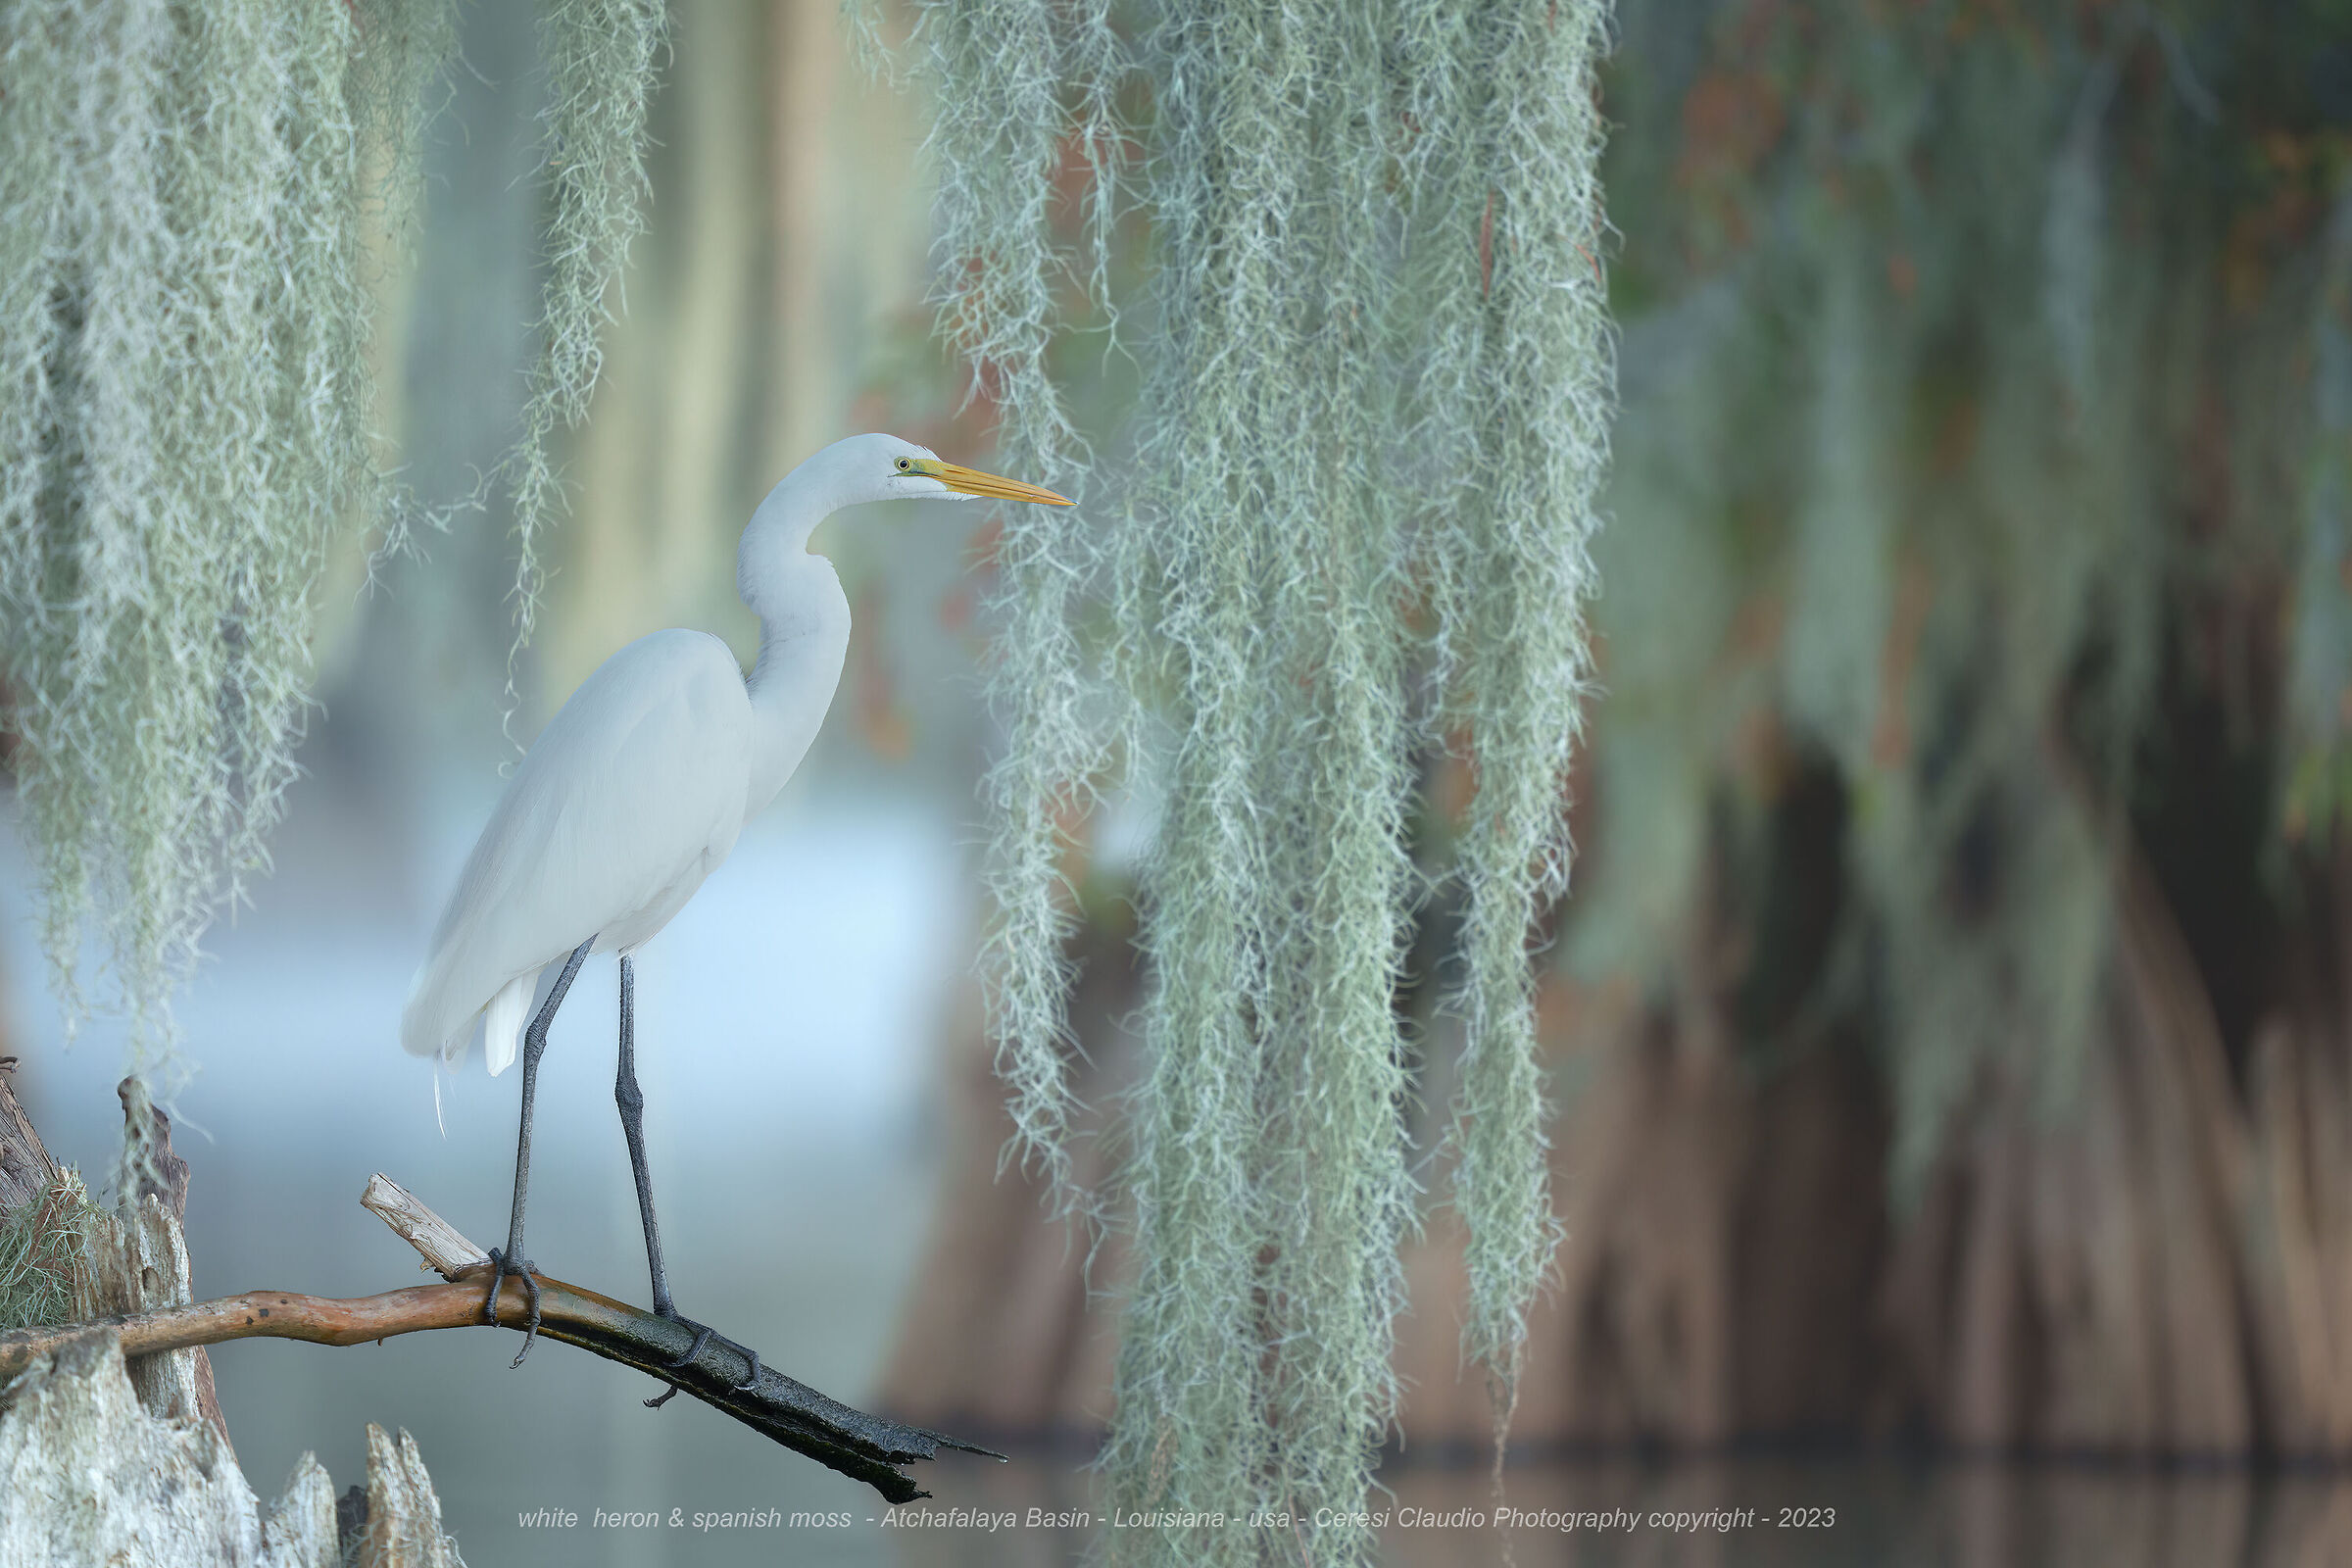 white heron & Spanish moss - Atchafalaya Basin...